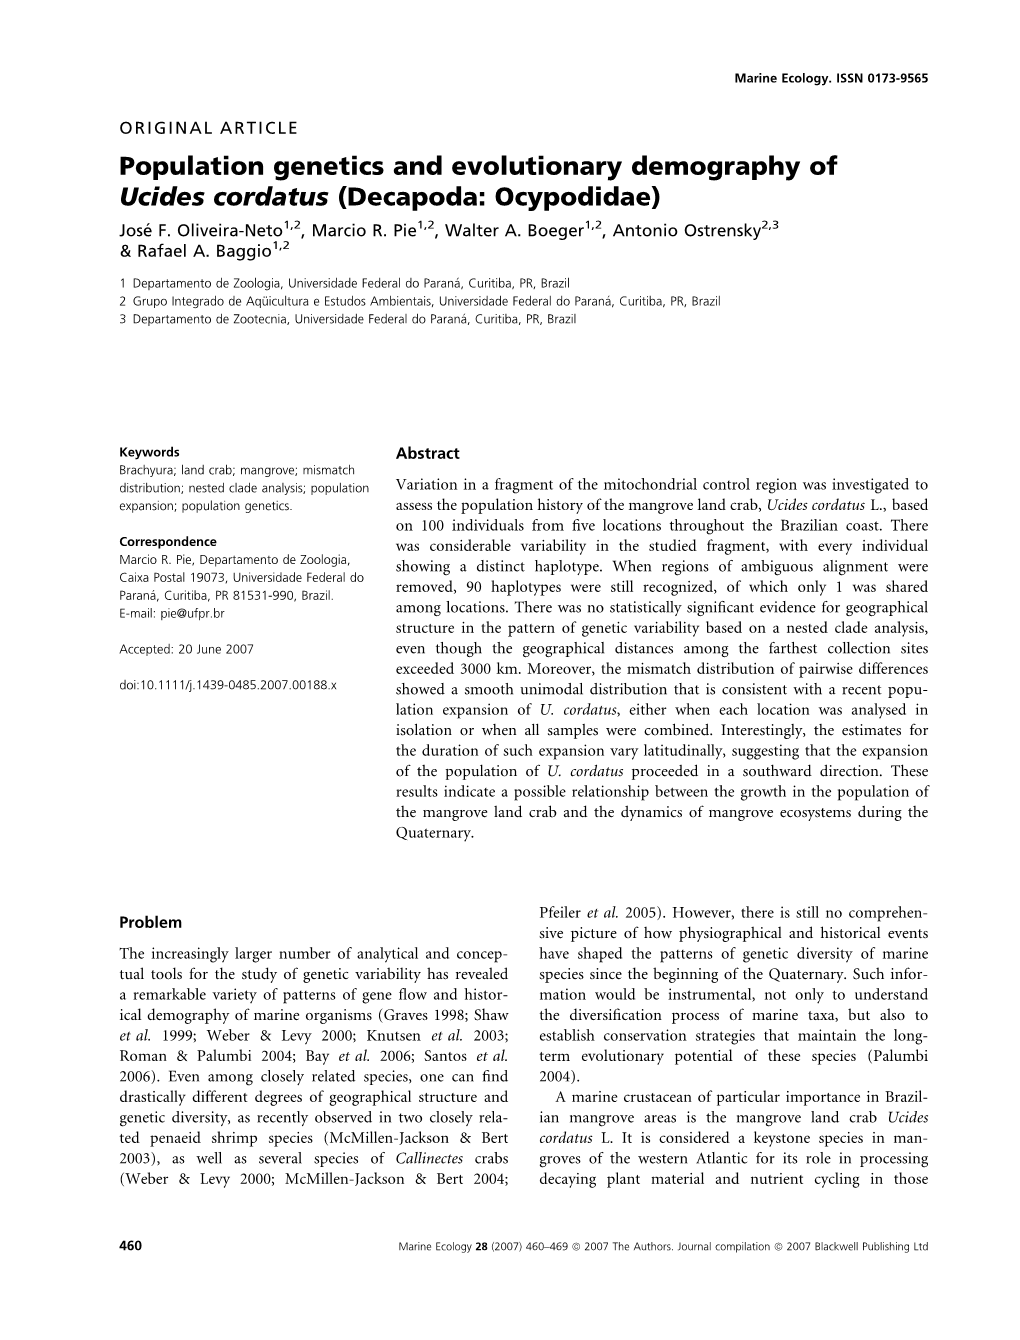 Population Genetics and Evolutionary Demography of Ucides Cordatus (Decapoda: Ocypodidae) Jose´ F